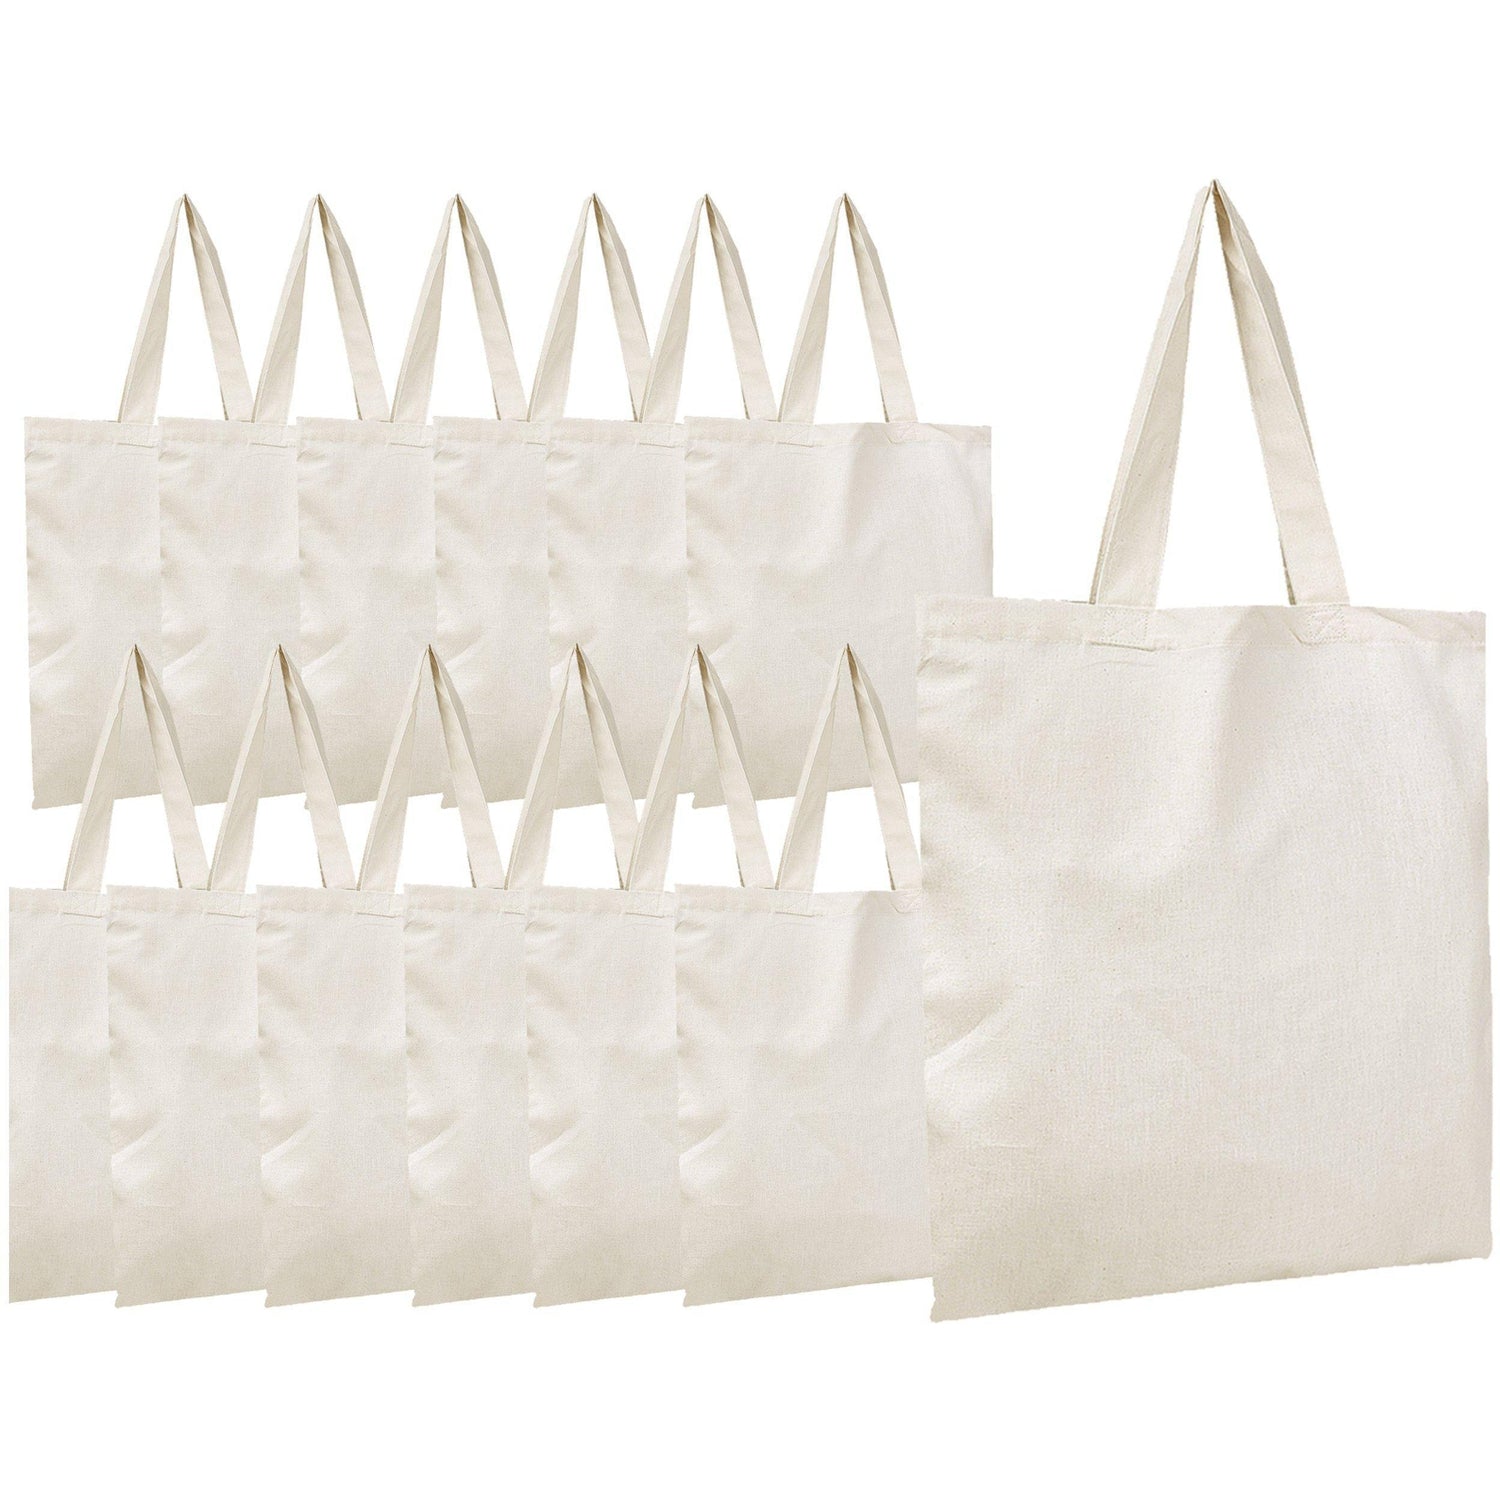 Cotton Canvas Tote Bags in Bulk - 12 